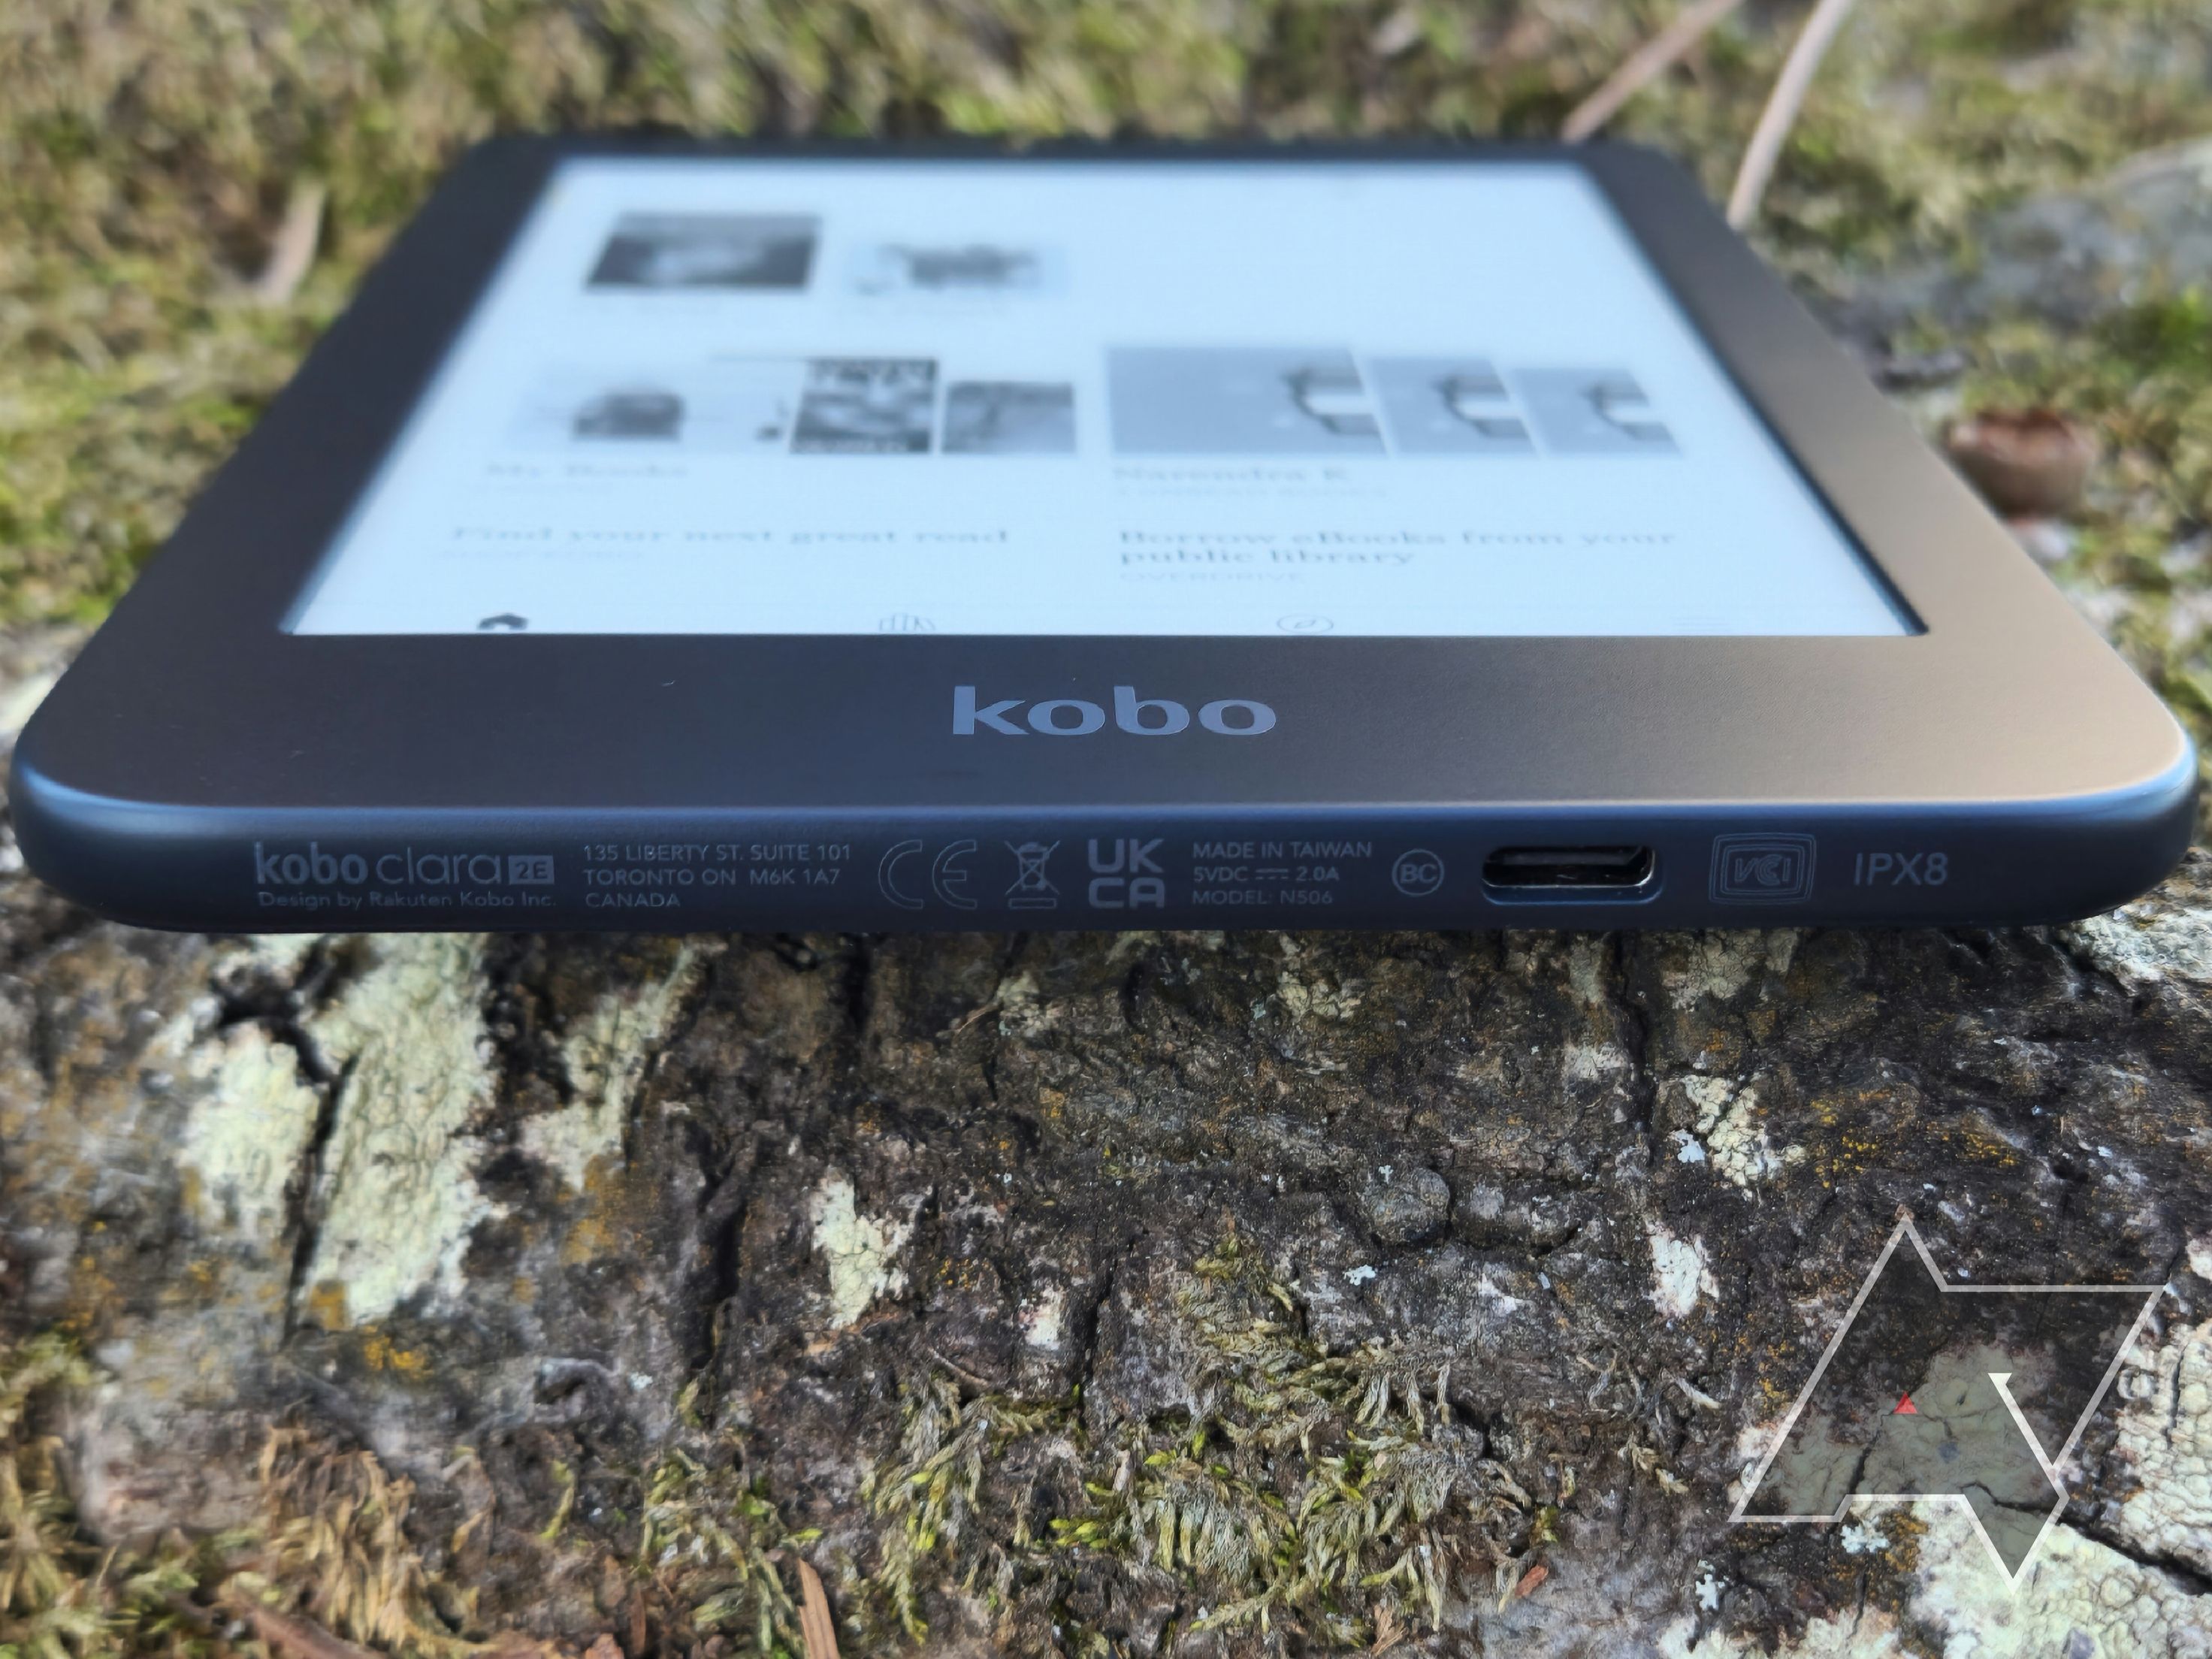 Kobo Clara 2E eReader Bundle with Black SleepCover 6” Touchscreen WiFi 16GB  Waterproof : Electronics 